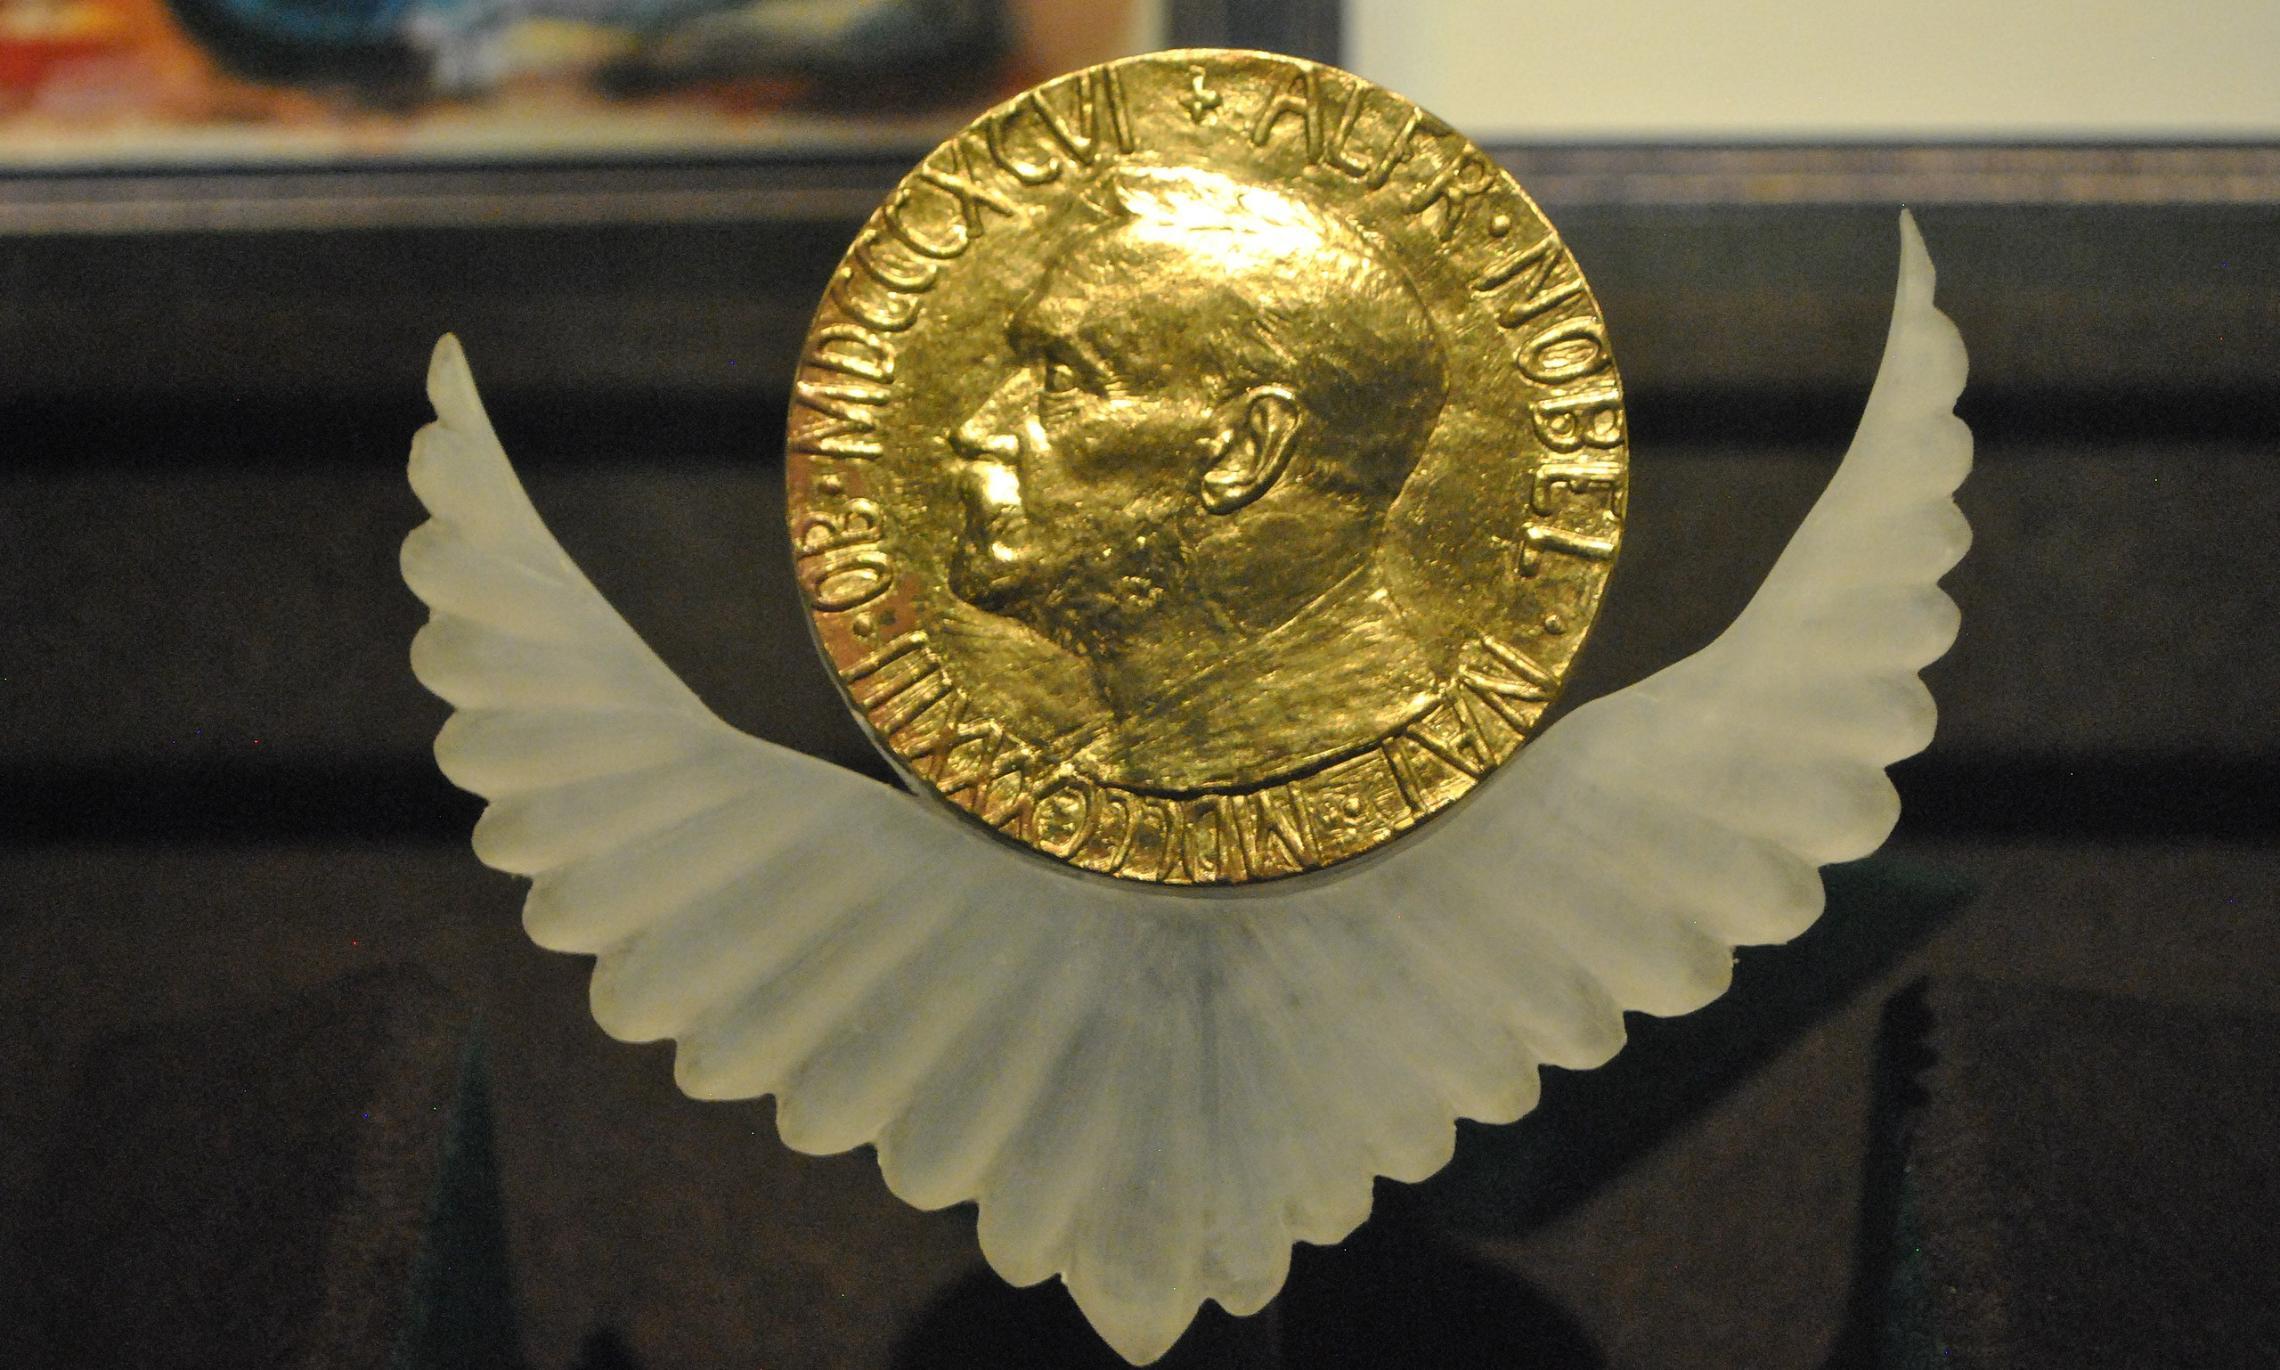 Нобелевская медаль мира продана за 103,5 миллиона долларов США. Фото: ProtoplasmaKid / Wikimedia Commons / CC-BY-SA 4.0